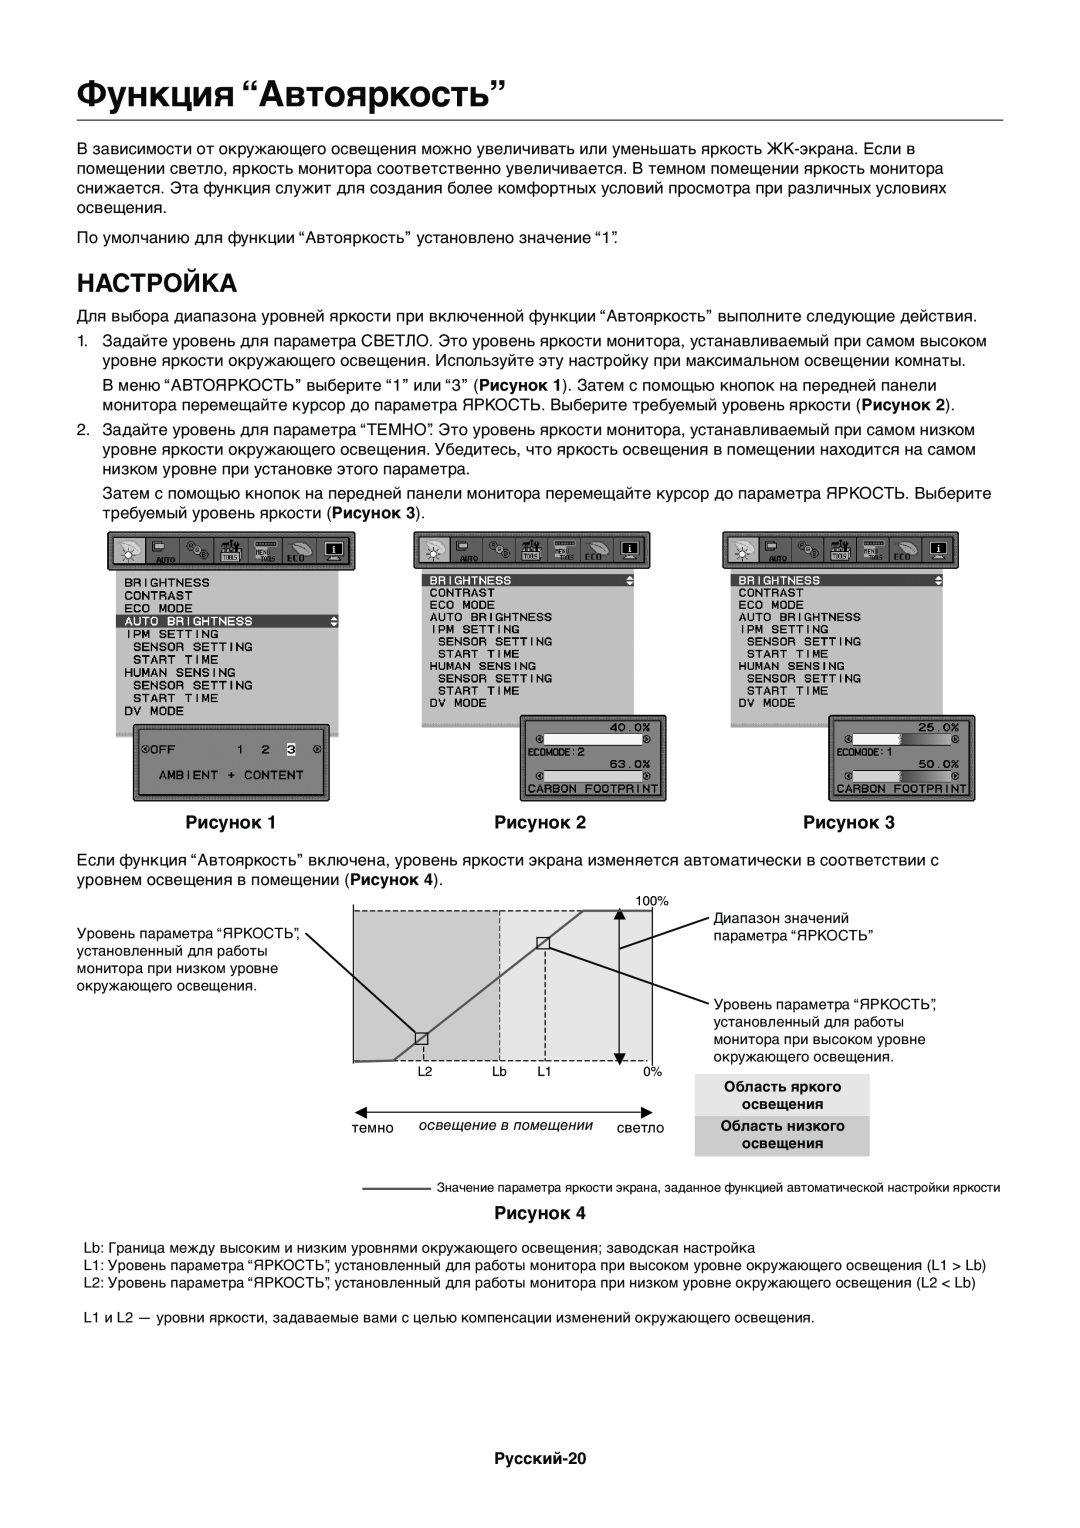 NEC EX231WP manual Функция “Автояркость”, Настройка, Рисунок 